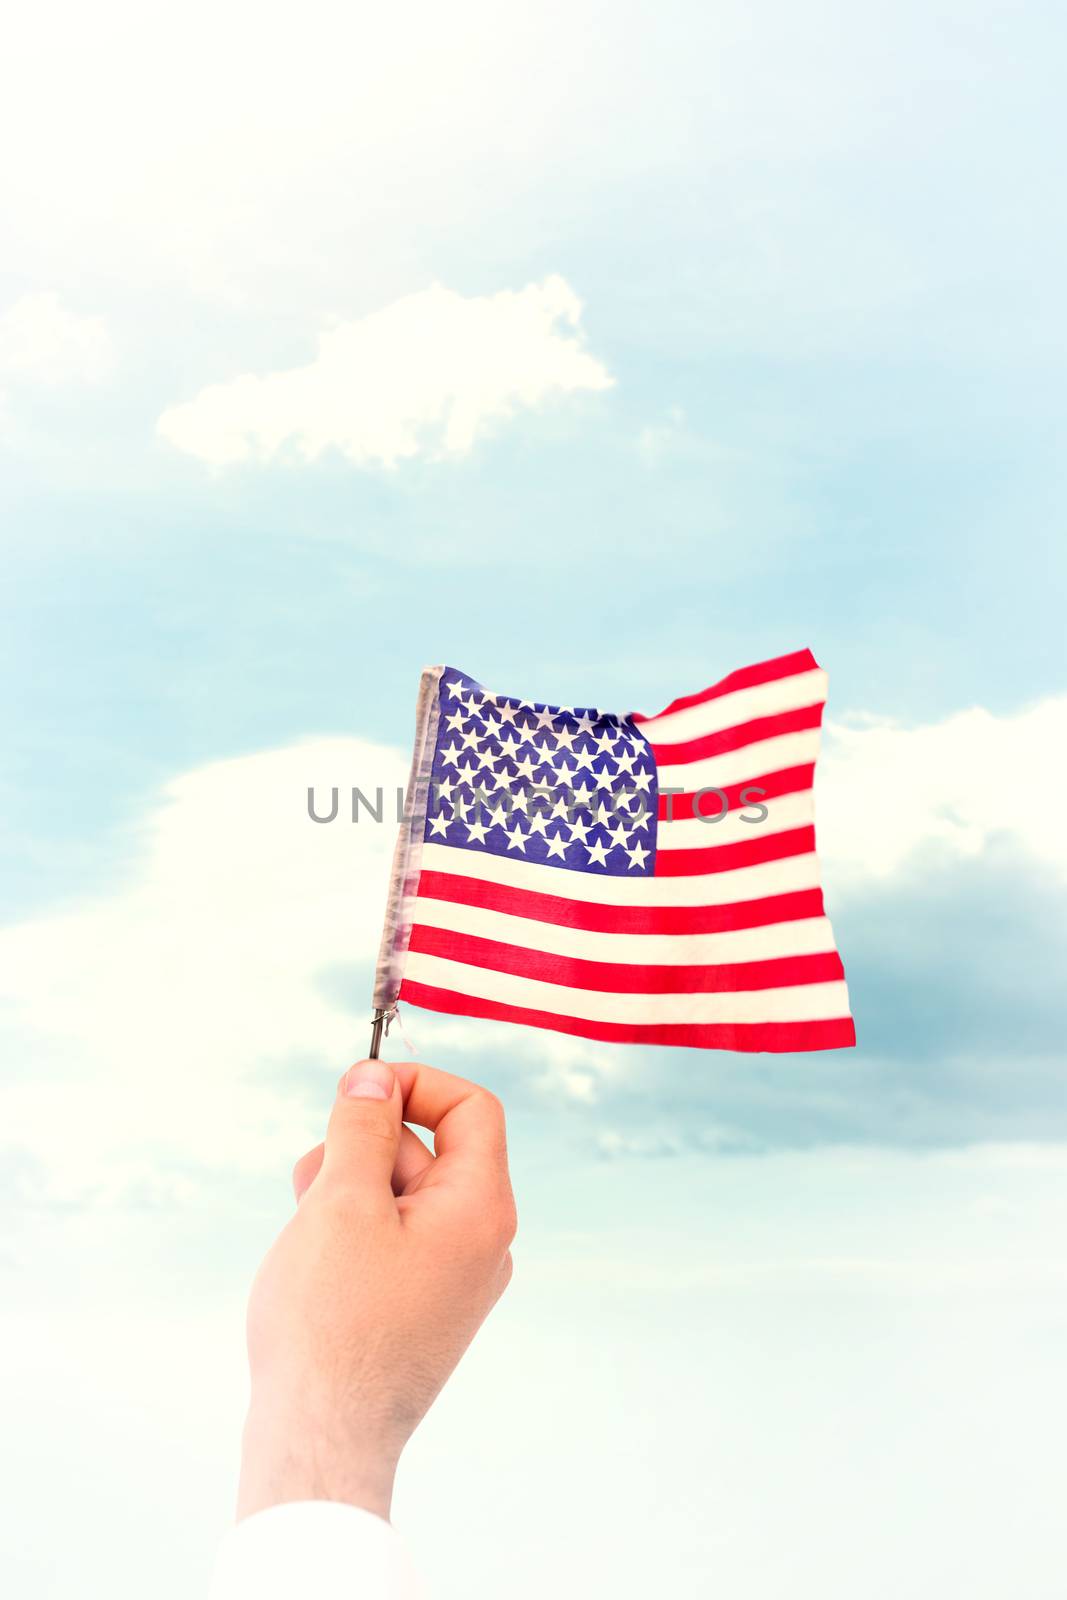 Hand waving american flag against blue sky